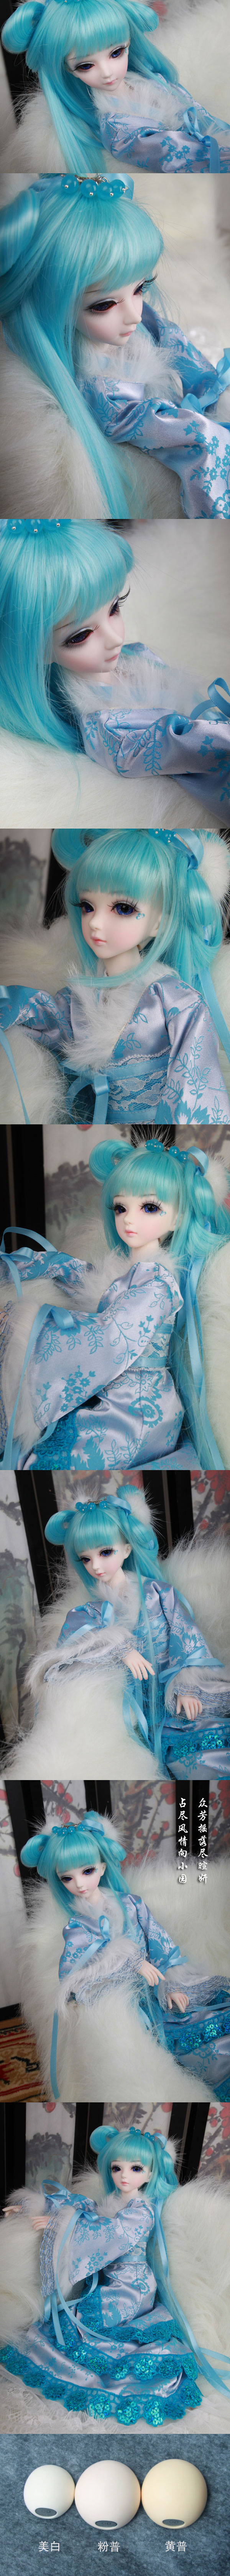 BJD Xuan Yan Girl 43cm Boll-jointed doll